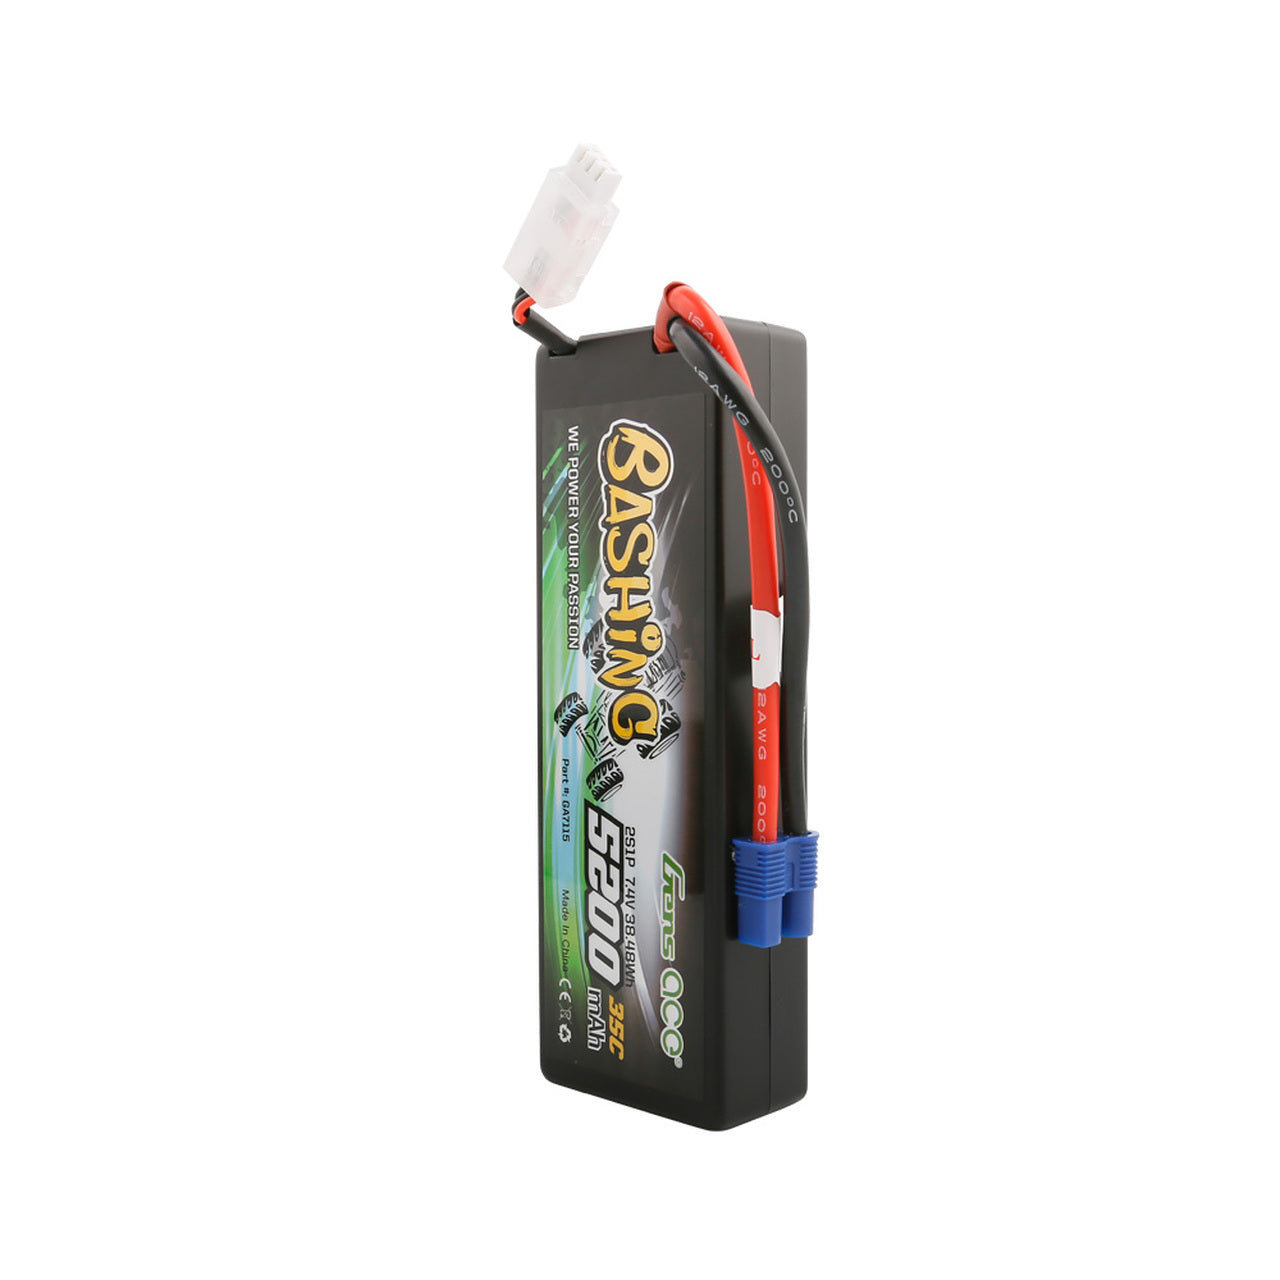 Gens Ace Bashing Series 5200mAh 7.4V 2S1P 35C Car Lipo Battery Pack Hardcase 24# With EC3 Plug